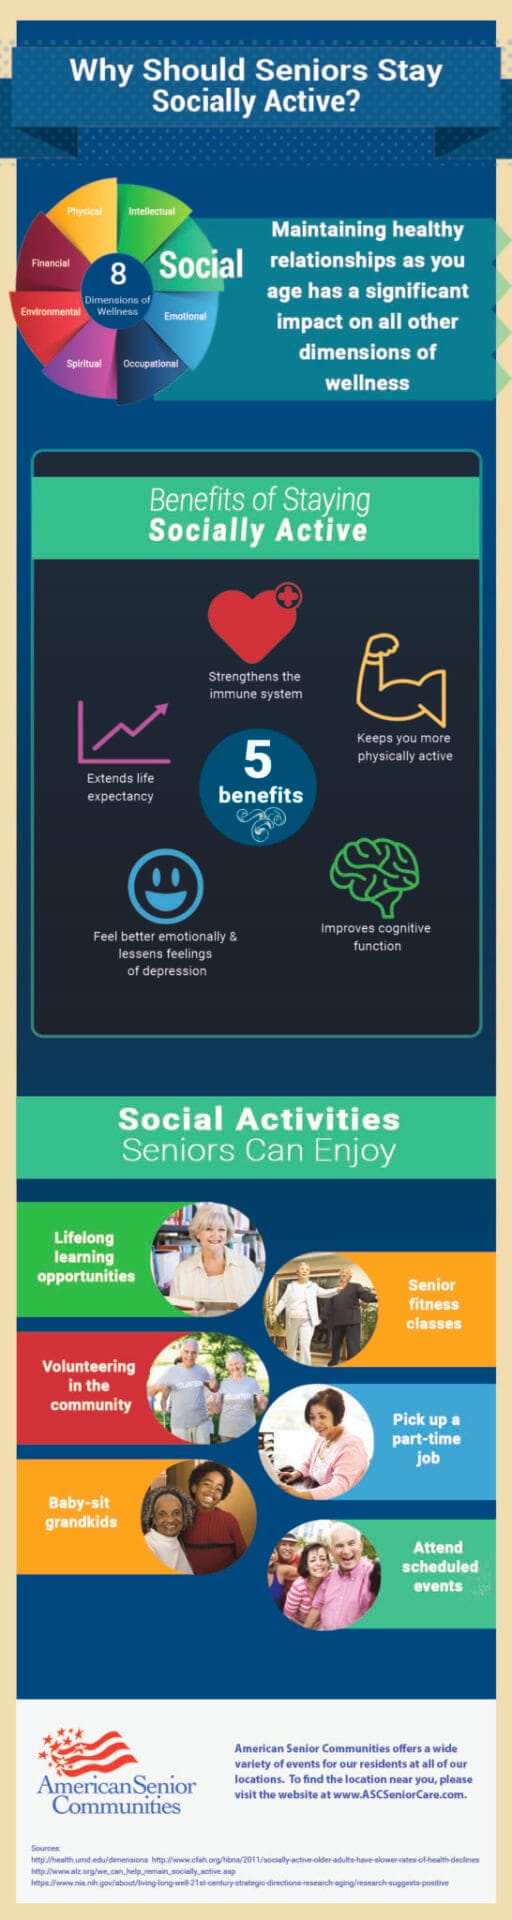 Social activities for seniors